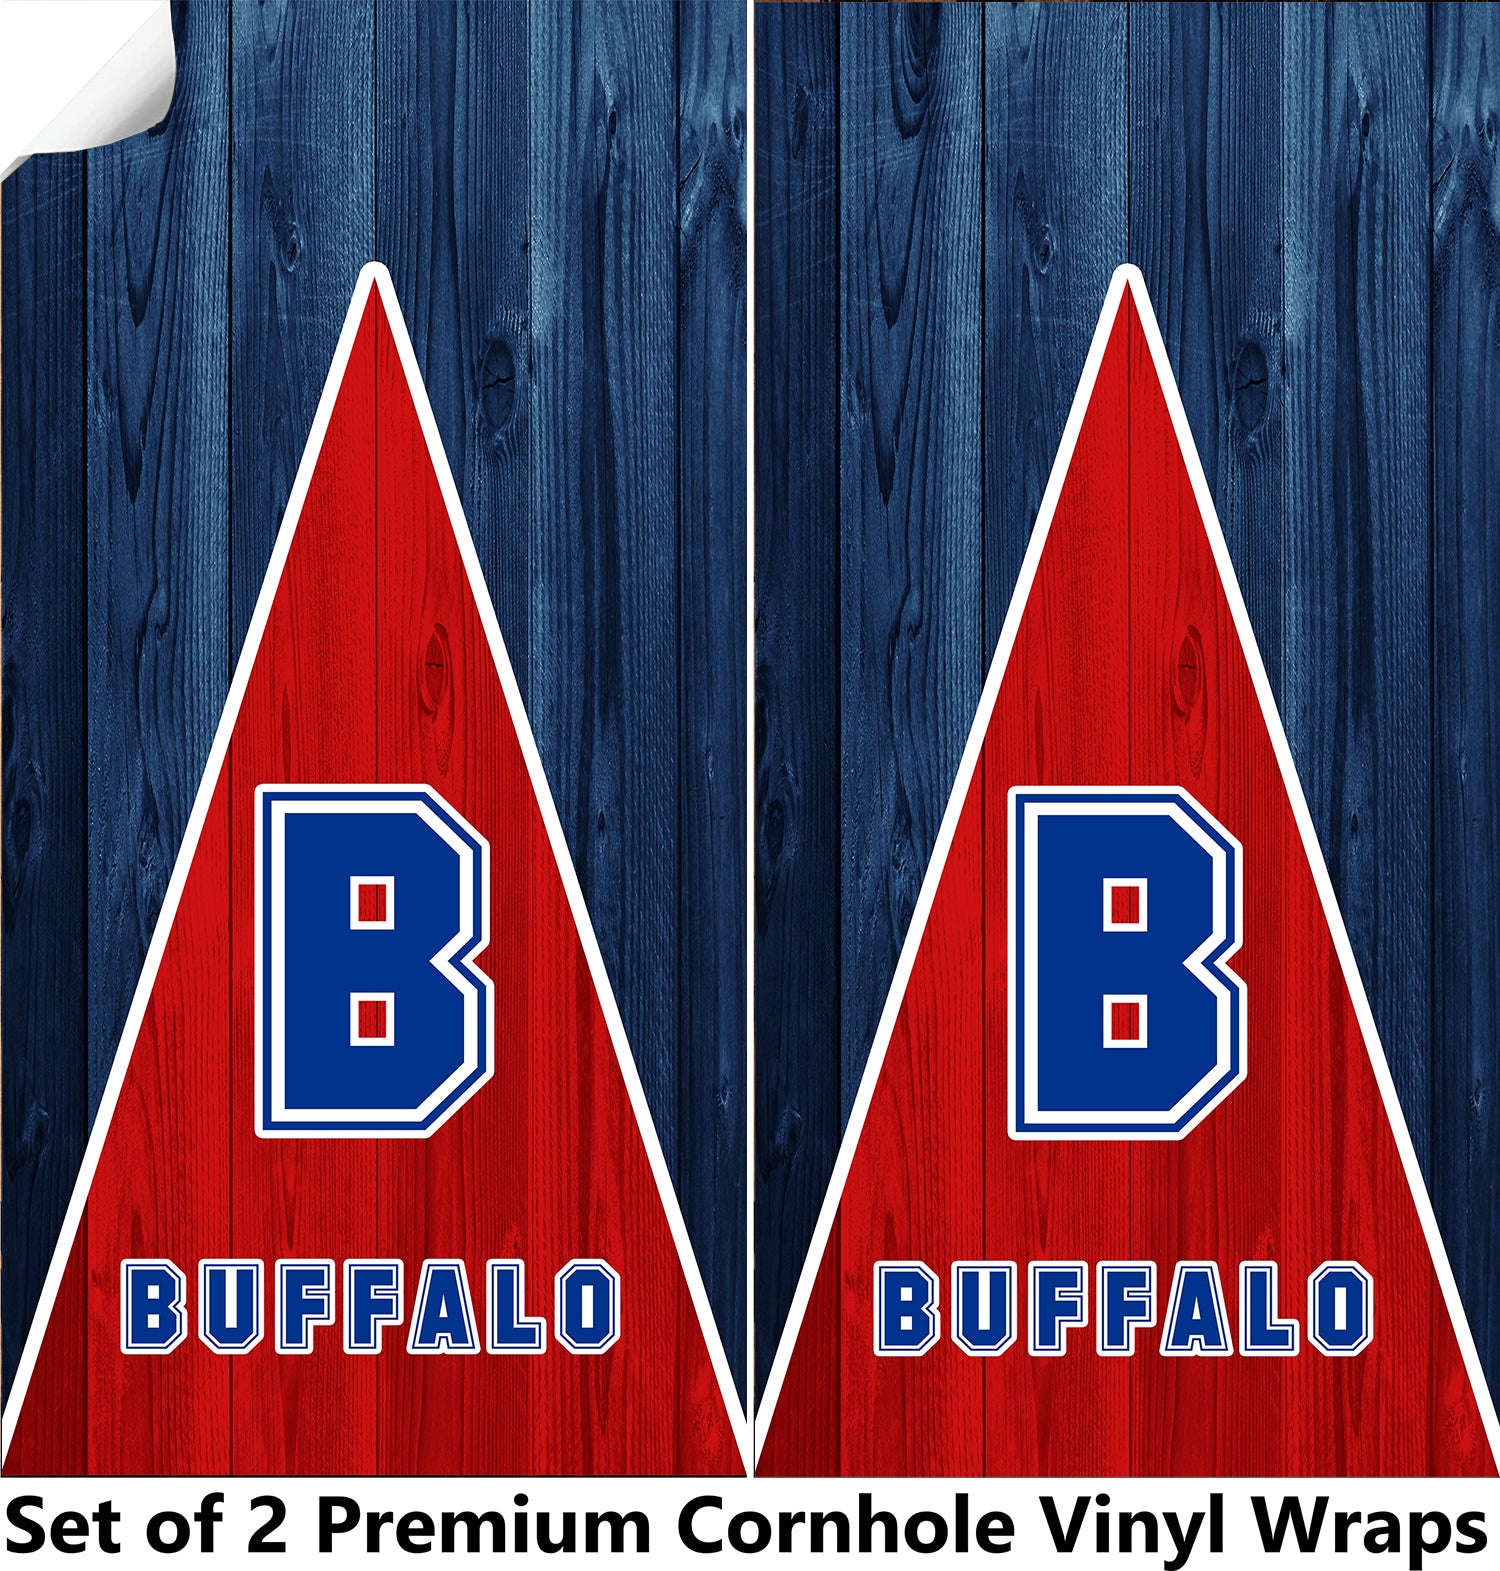 Buffalo Football Cornhole Boards Wraps (Set of 2)